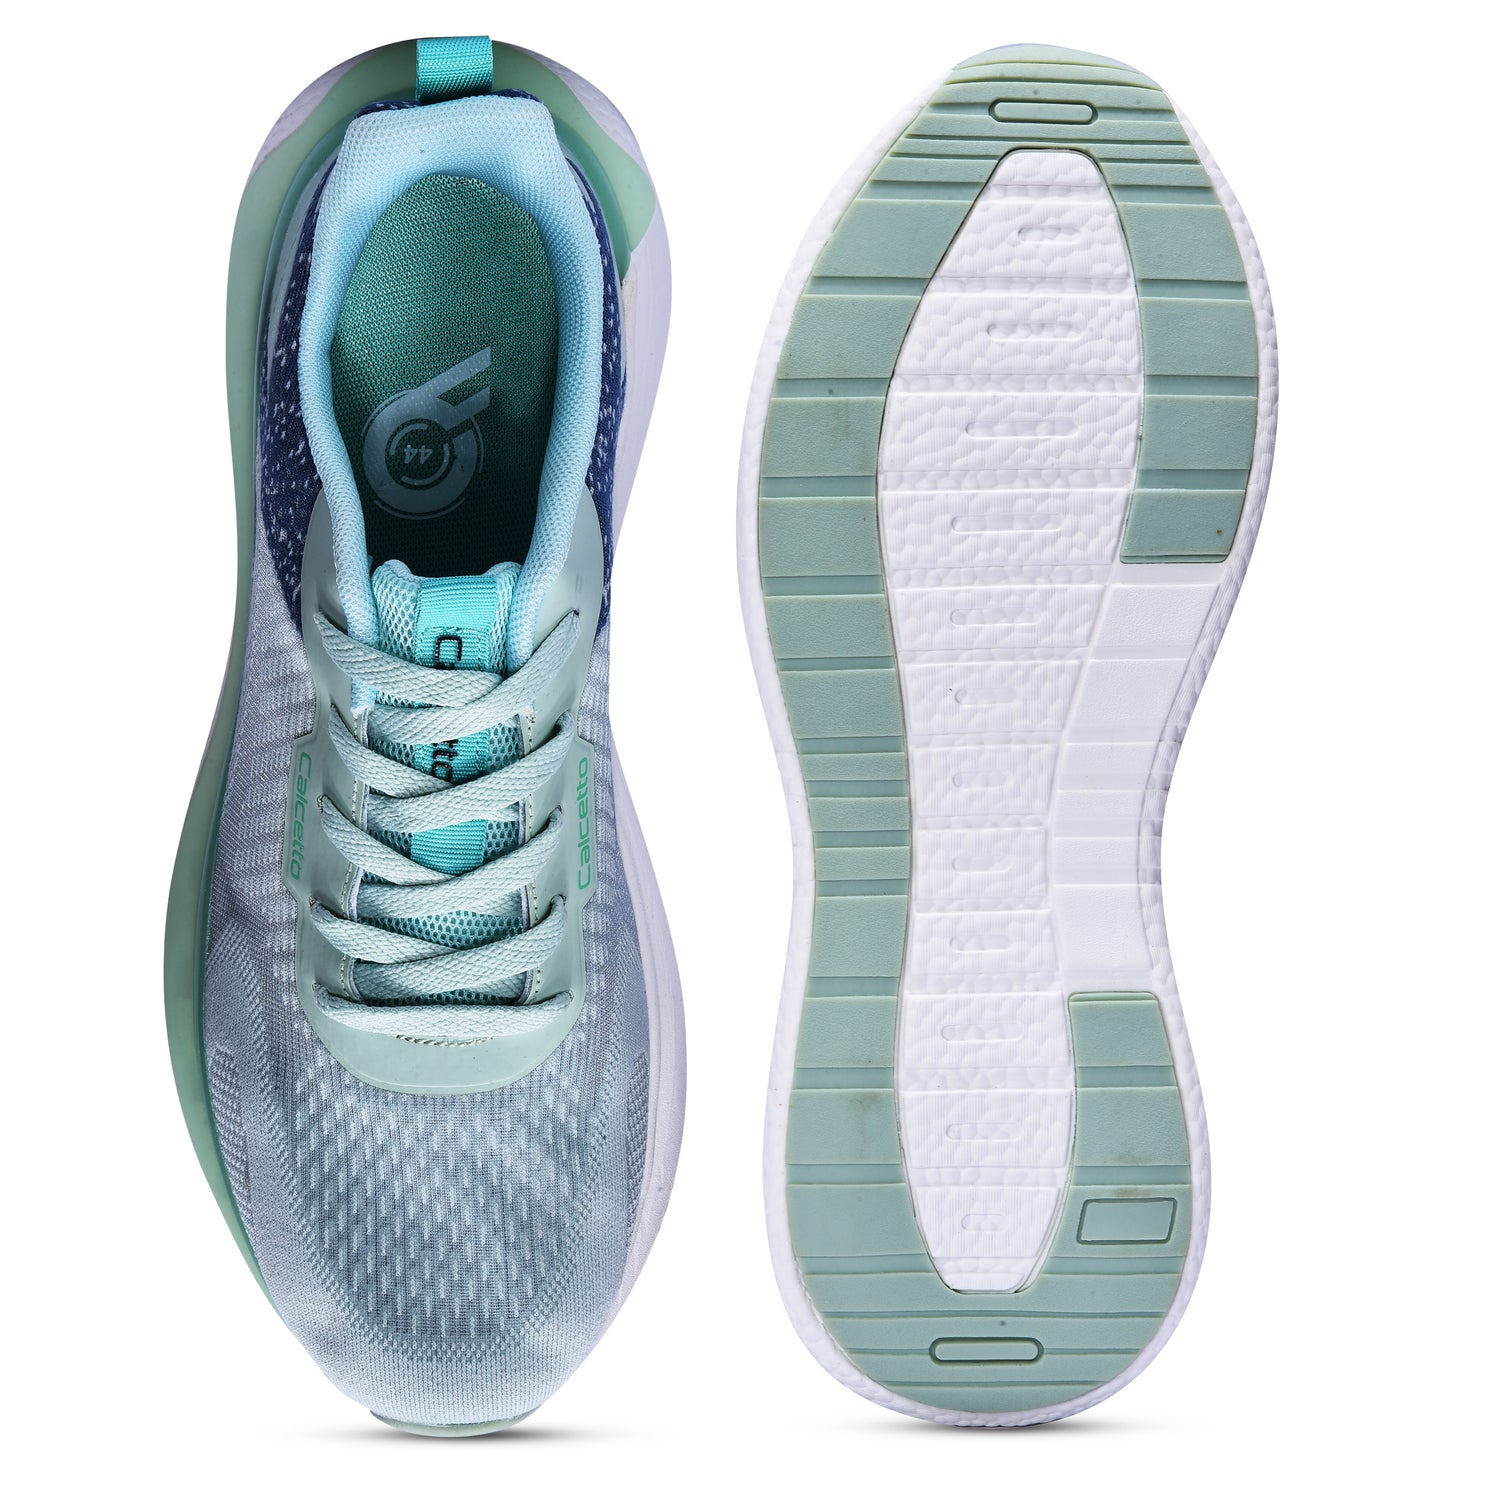 Calcetto CLT-0986 Green Blue Running Shoe For Men